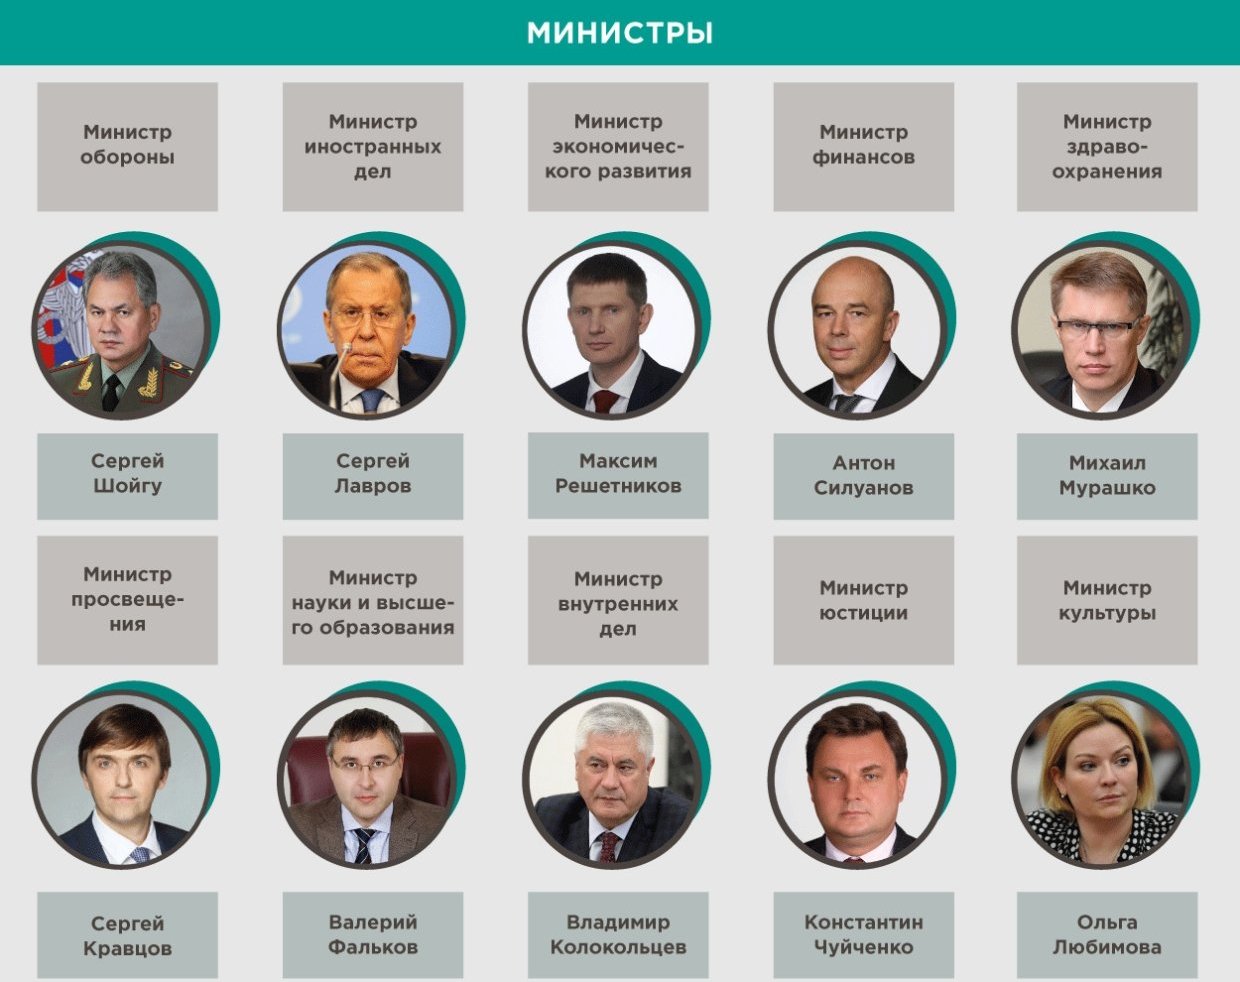 Председатели правительства совета министров рф